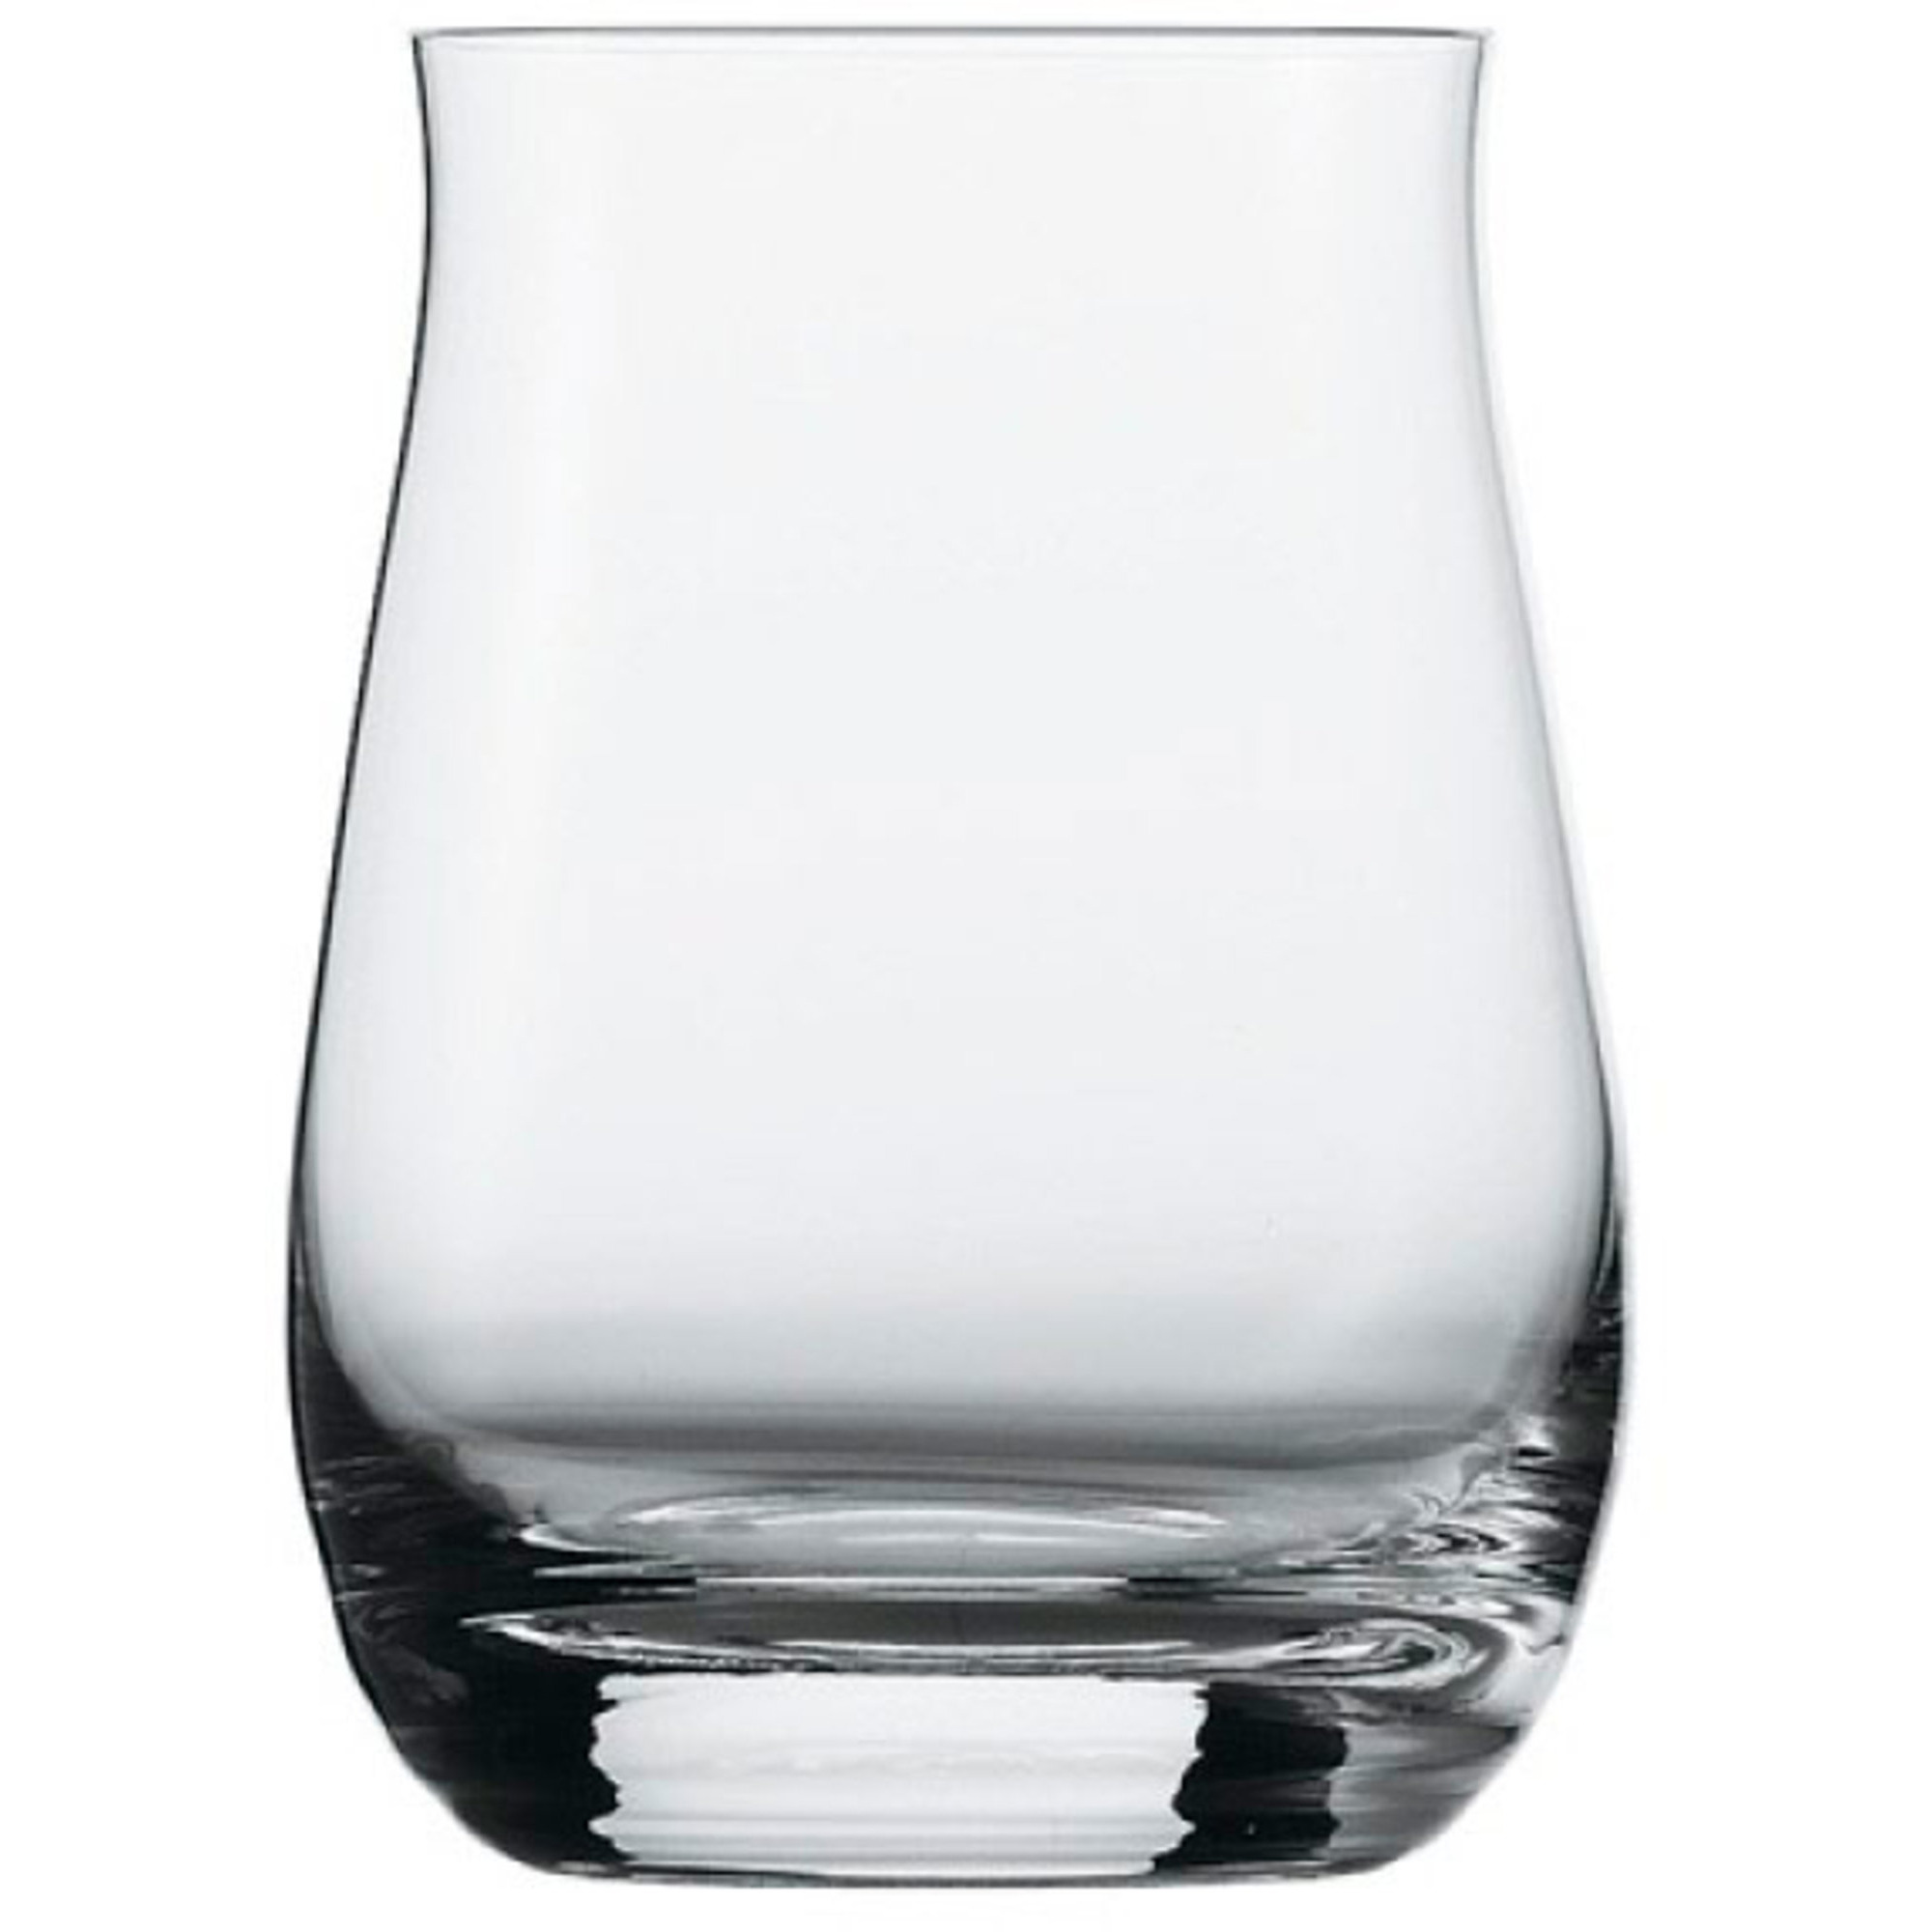 11: Spiegelau Premium Single Barrel Bourbon Whiskyglas